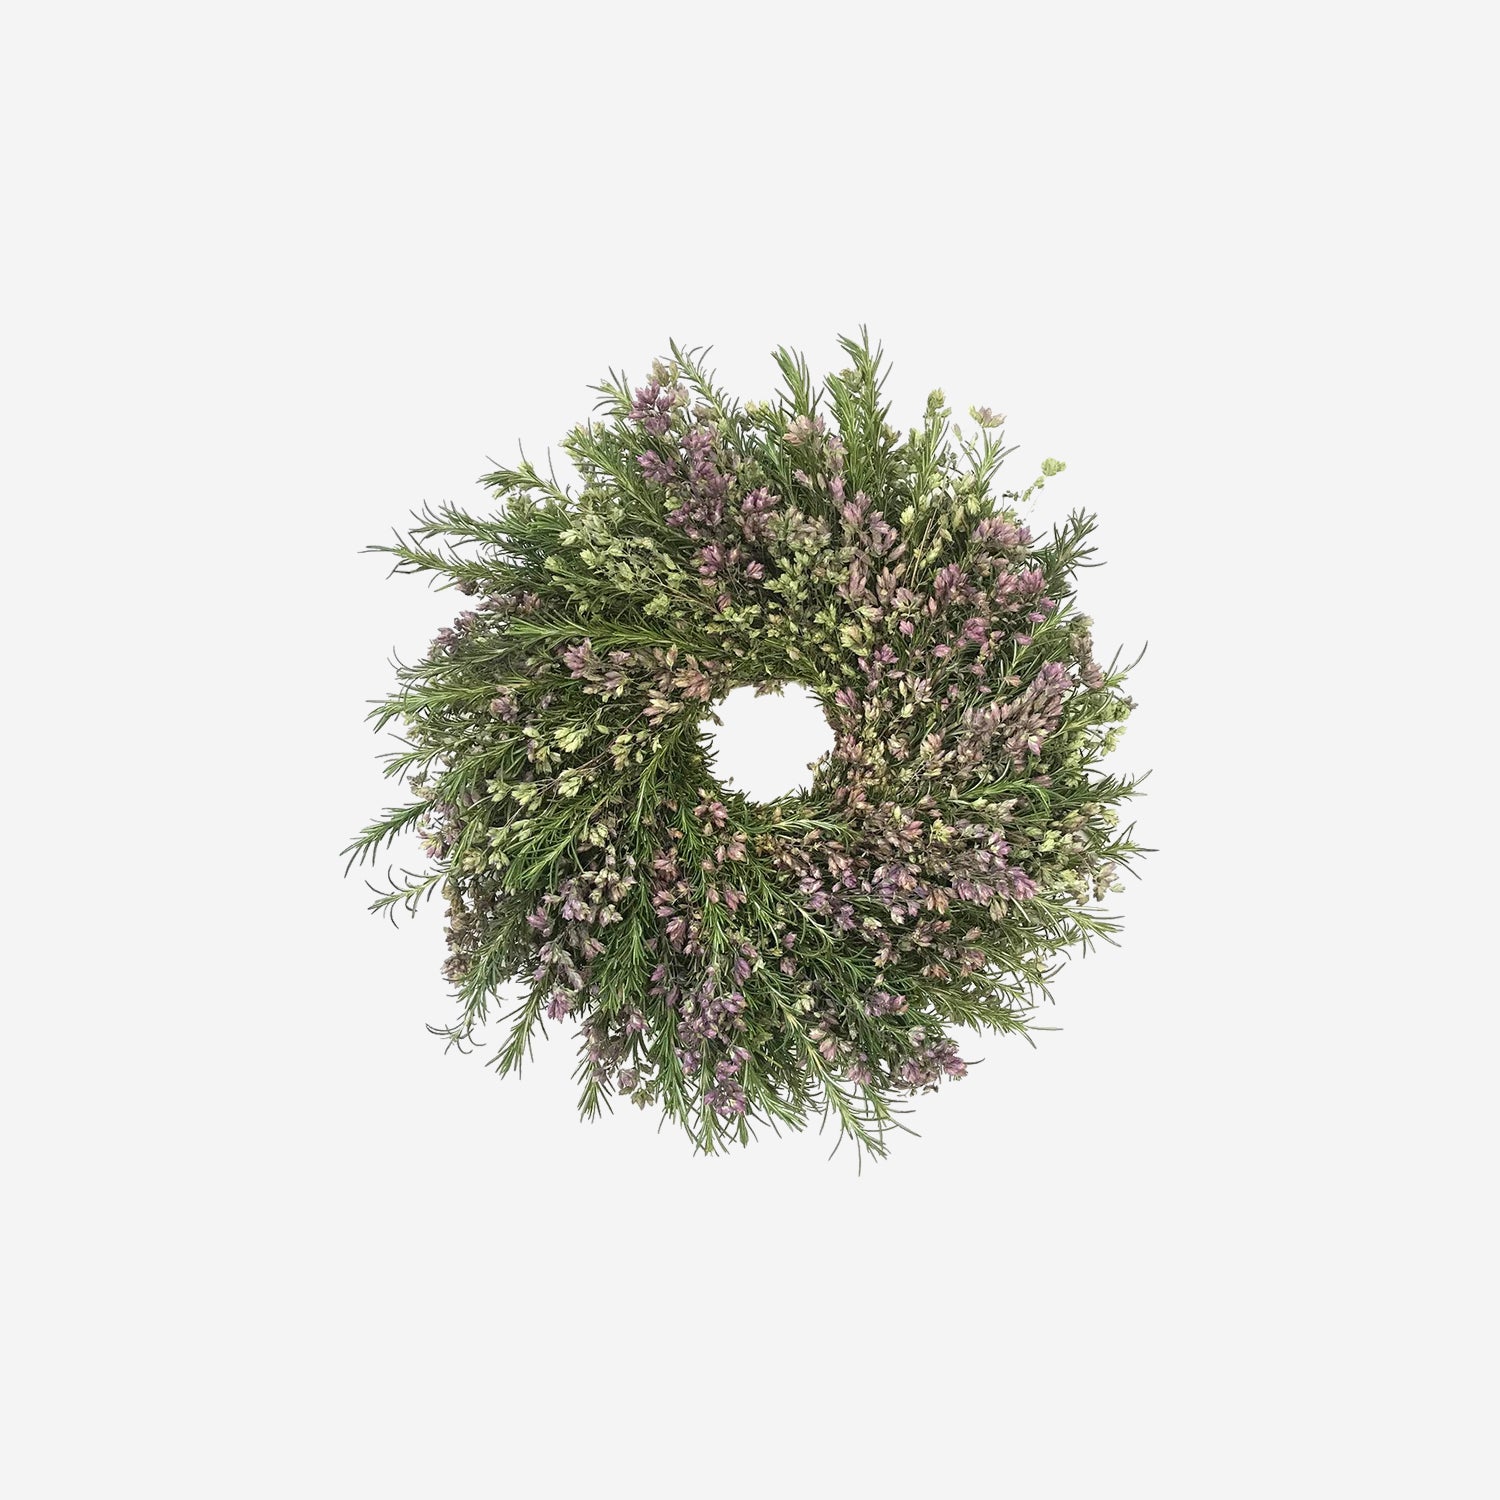 Rosemary and Dried Oregano Wreath